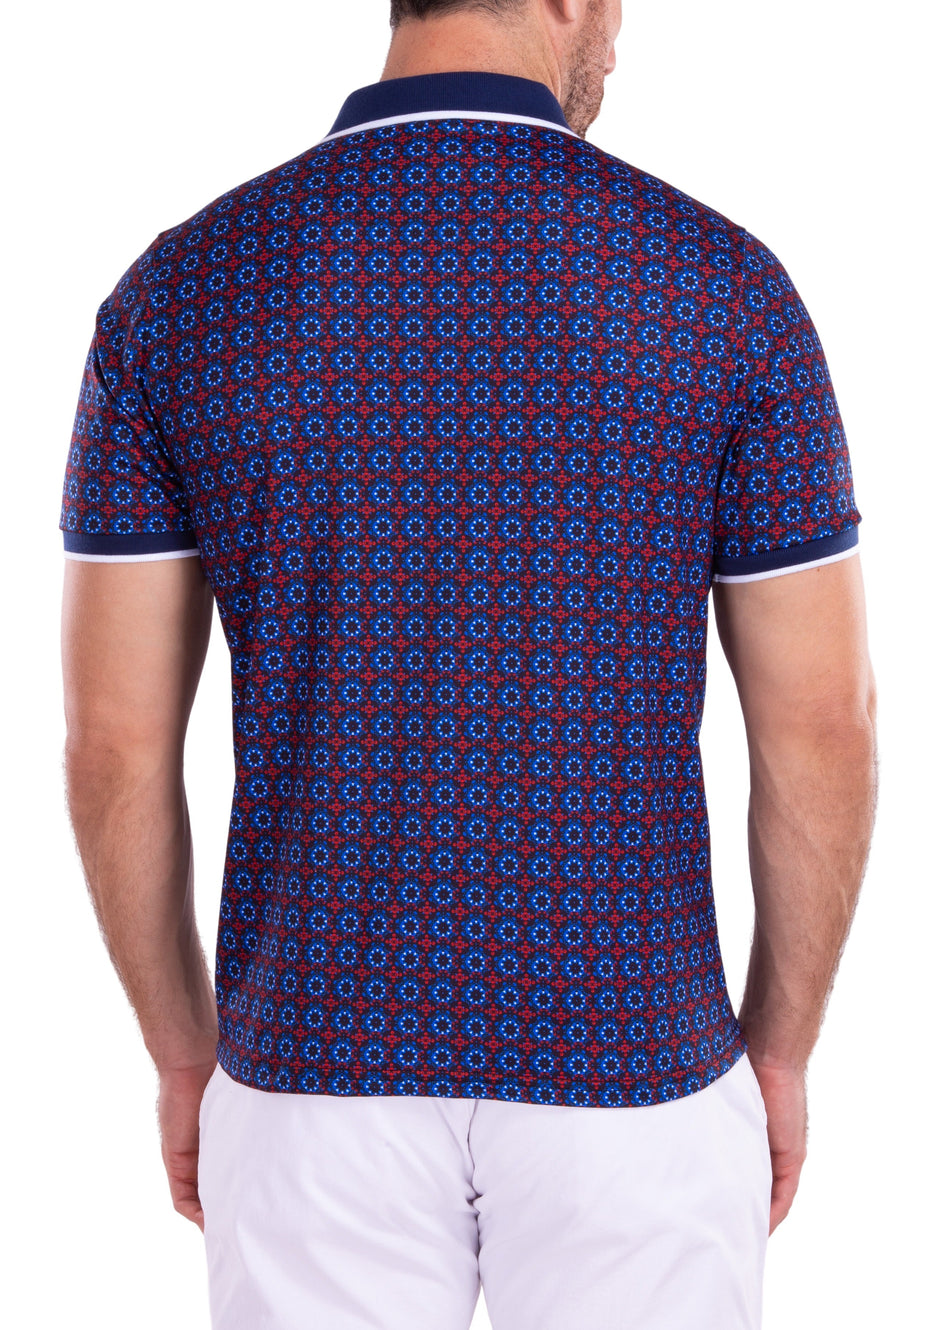 211833 - Navy Printed Polo Shirt